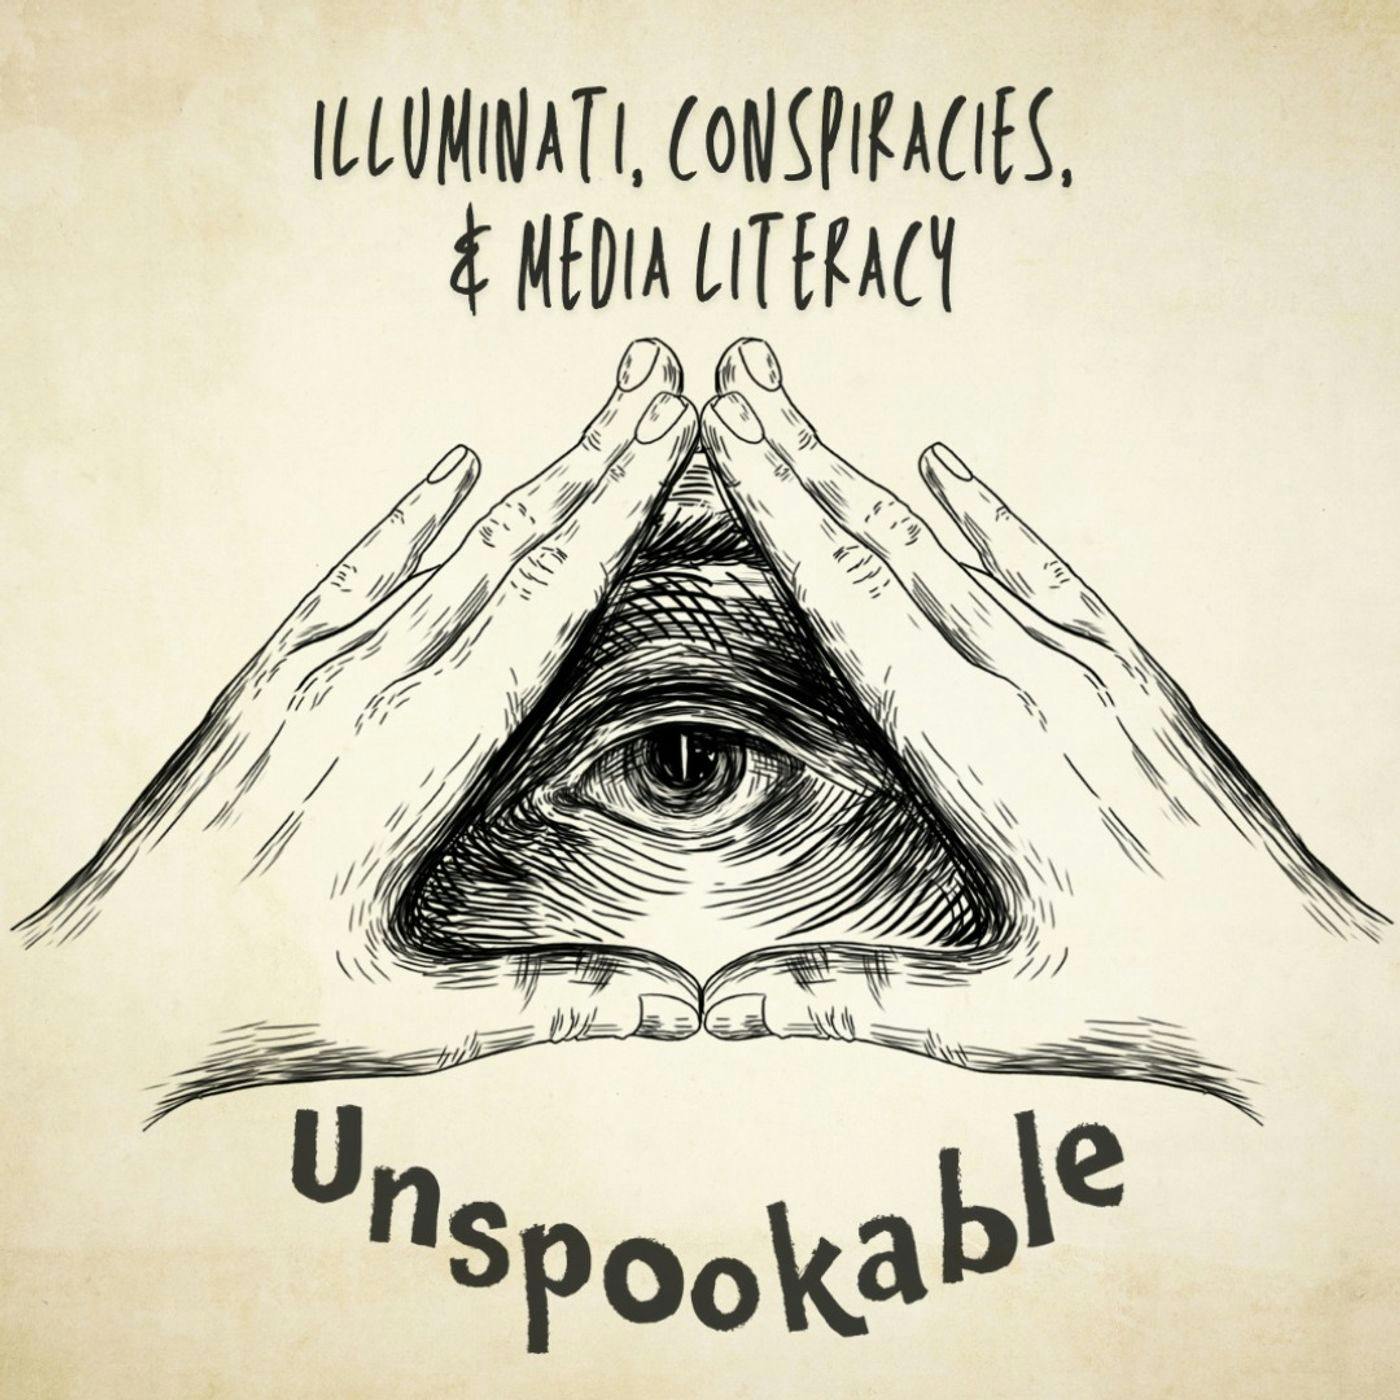 Episode 27: Illuminati, Conspiracies, & Media Literacy